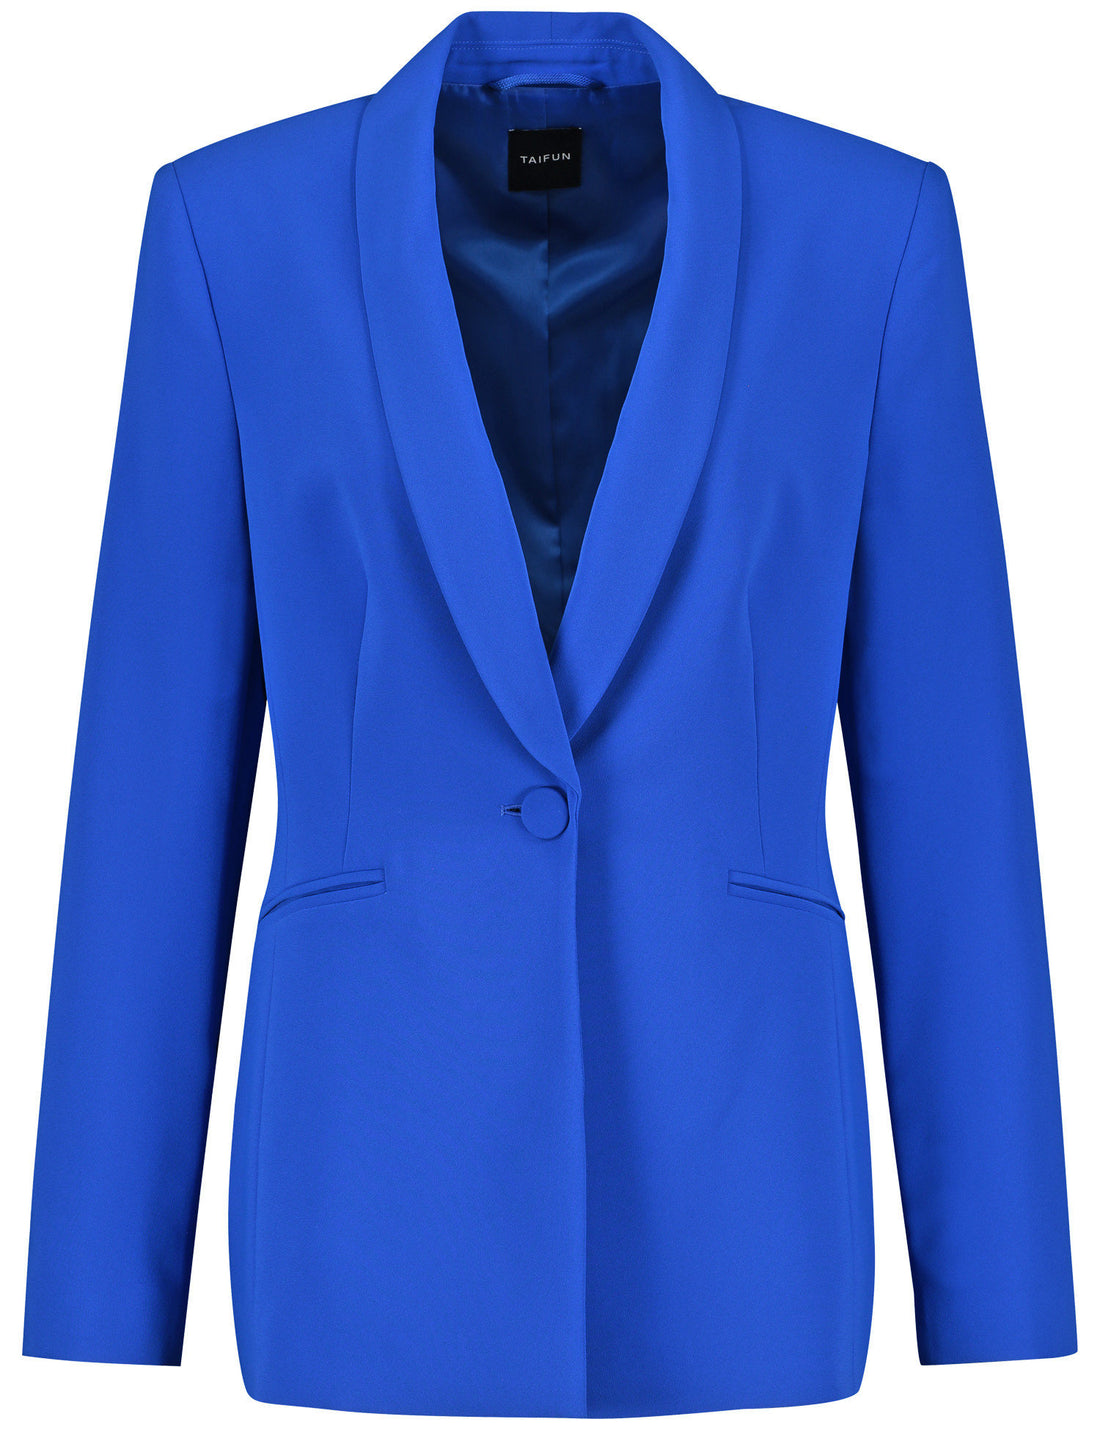 Tailored Blazer With Shawl Collar_530321-11088_8870_02